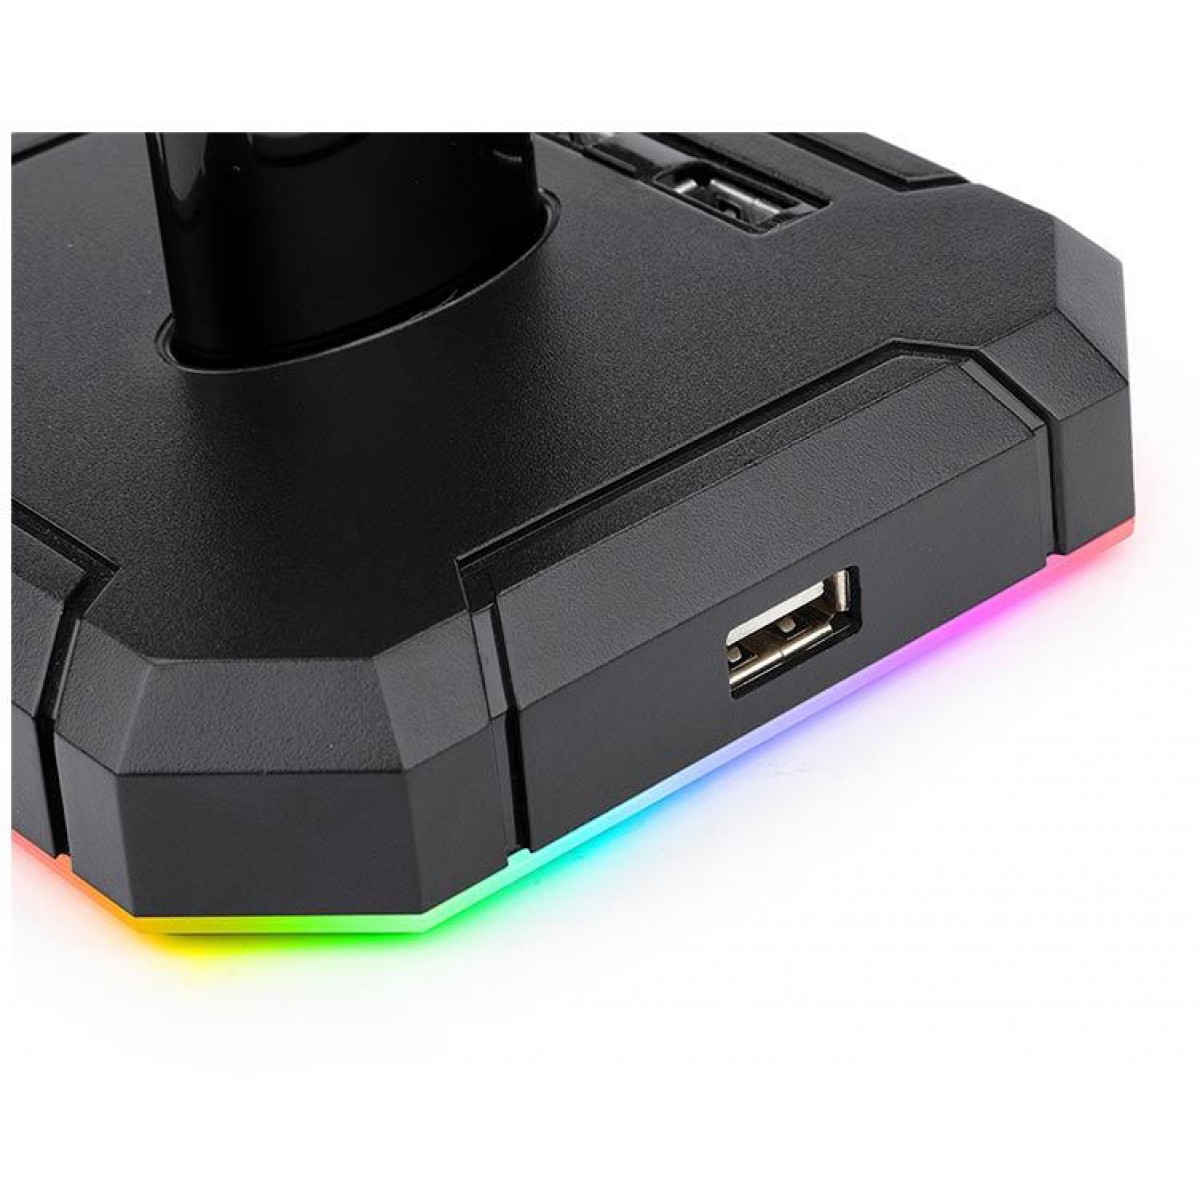 Suporte para Headset Redragon Scepter Pro RGB, Black, HA300